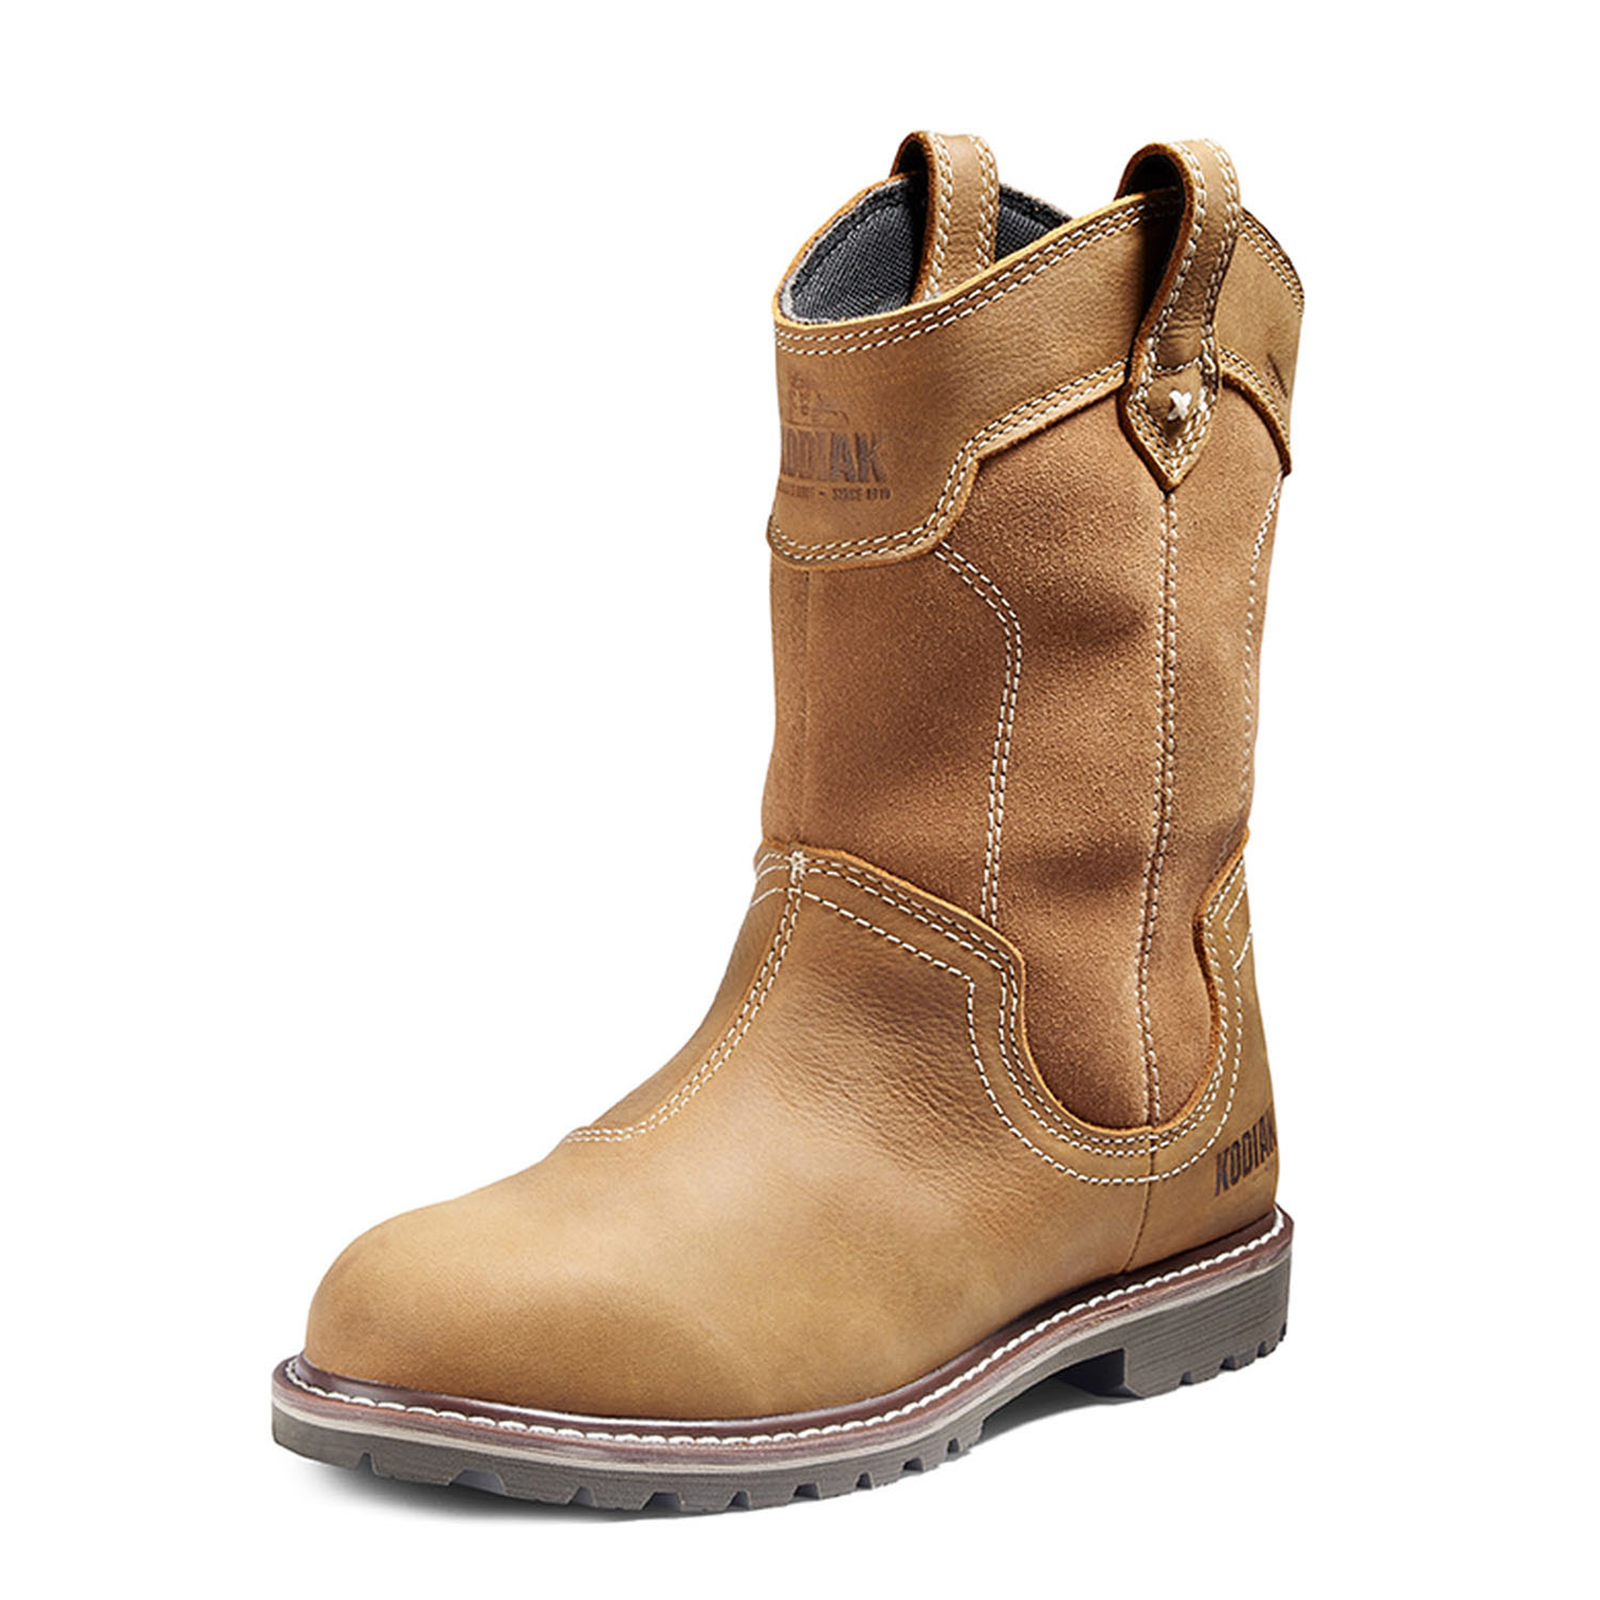 Kodiak Women's Plain Toe Boots Bralorne Wellington Full Grain Leather Waterproof | Sizes 5-11